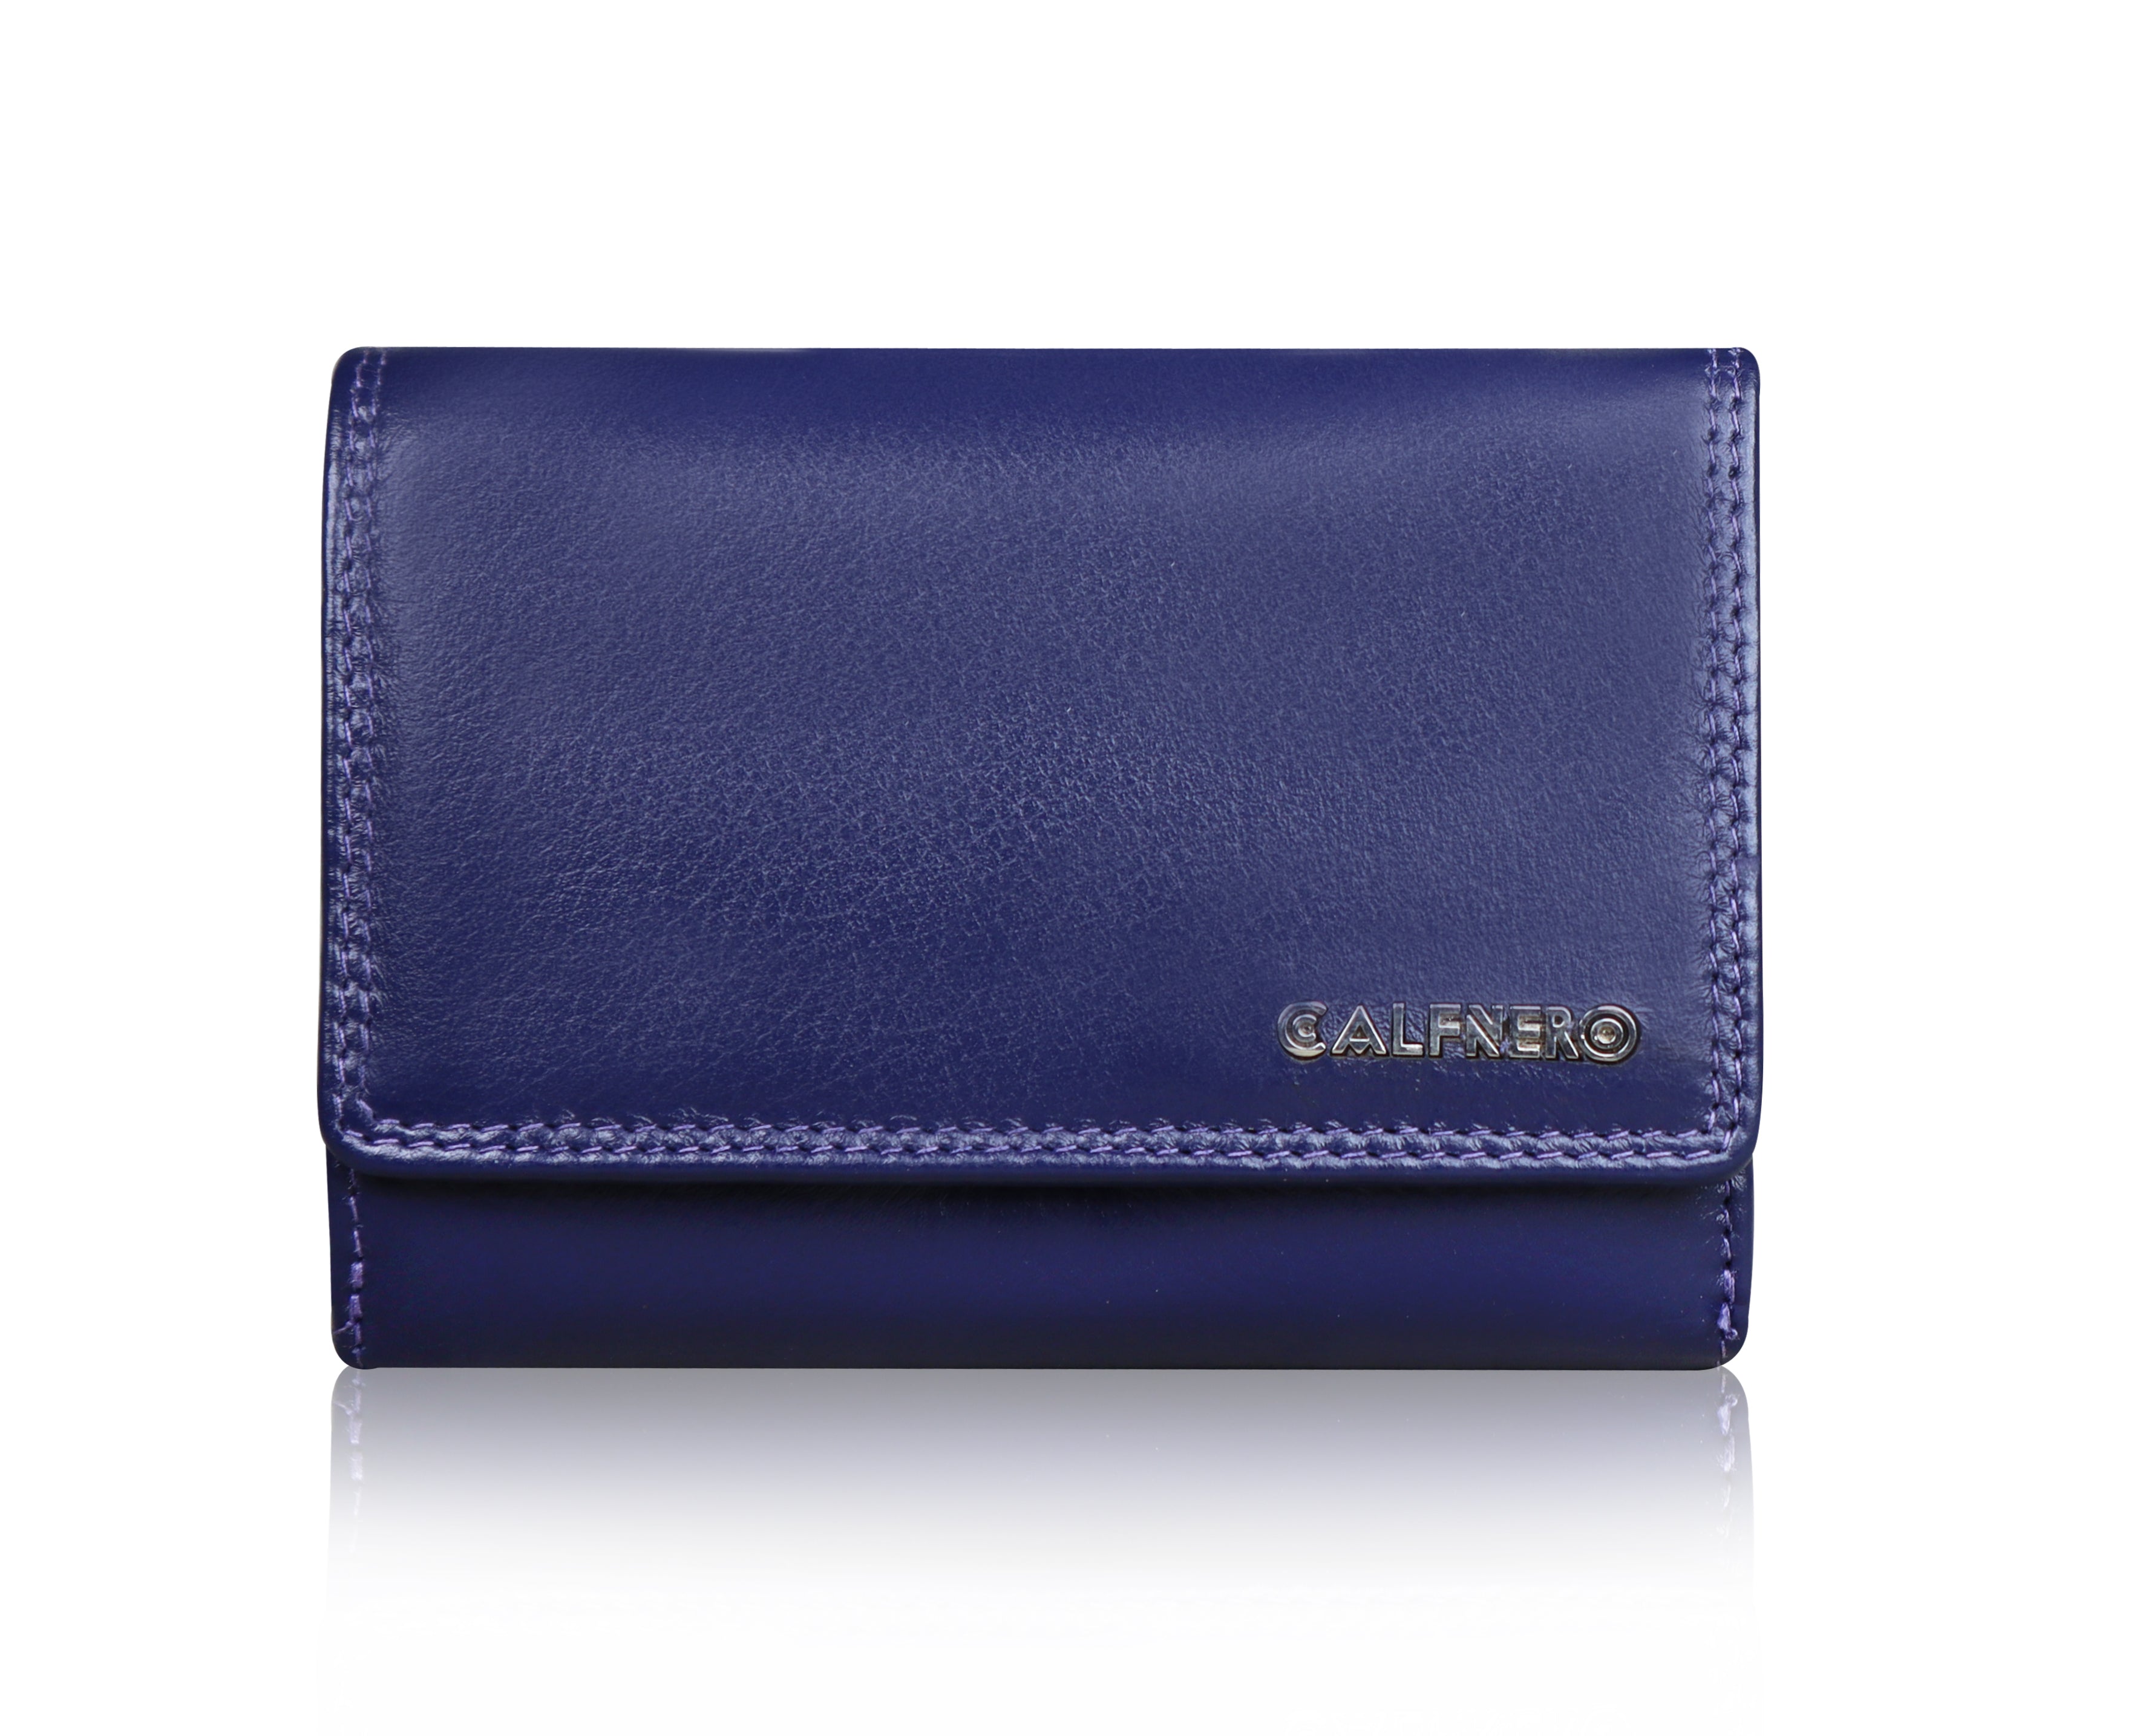 Small Wallet for Women Genuine Leather RFID Blocking Wallet Bifold Purse  Zipper Pocket Card Holder with ID Window,Purple - Walmart.com